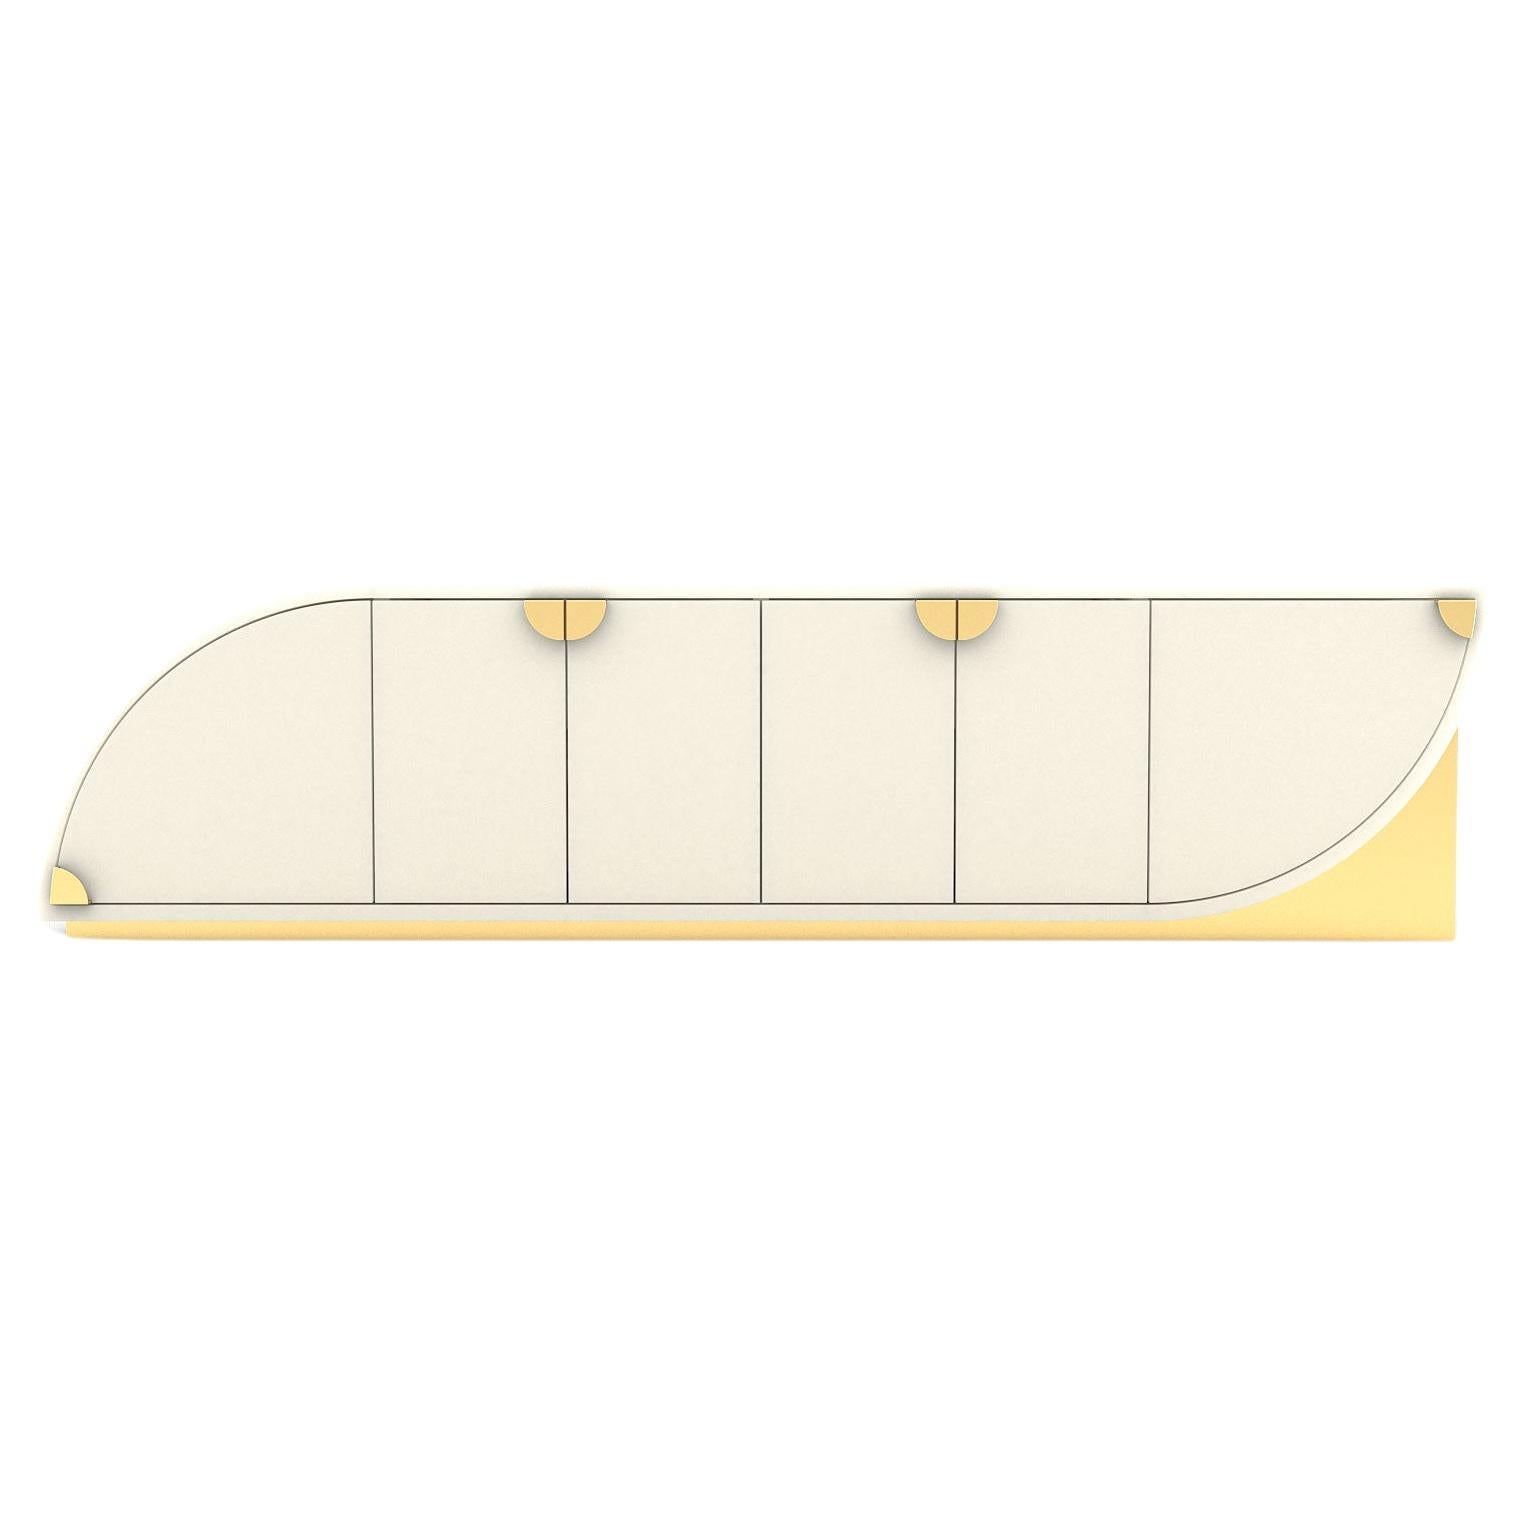 Delta Sideboard - Modernes Sideboard aus poliertem weißem Lack mit Messingdetails im Angebot